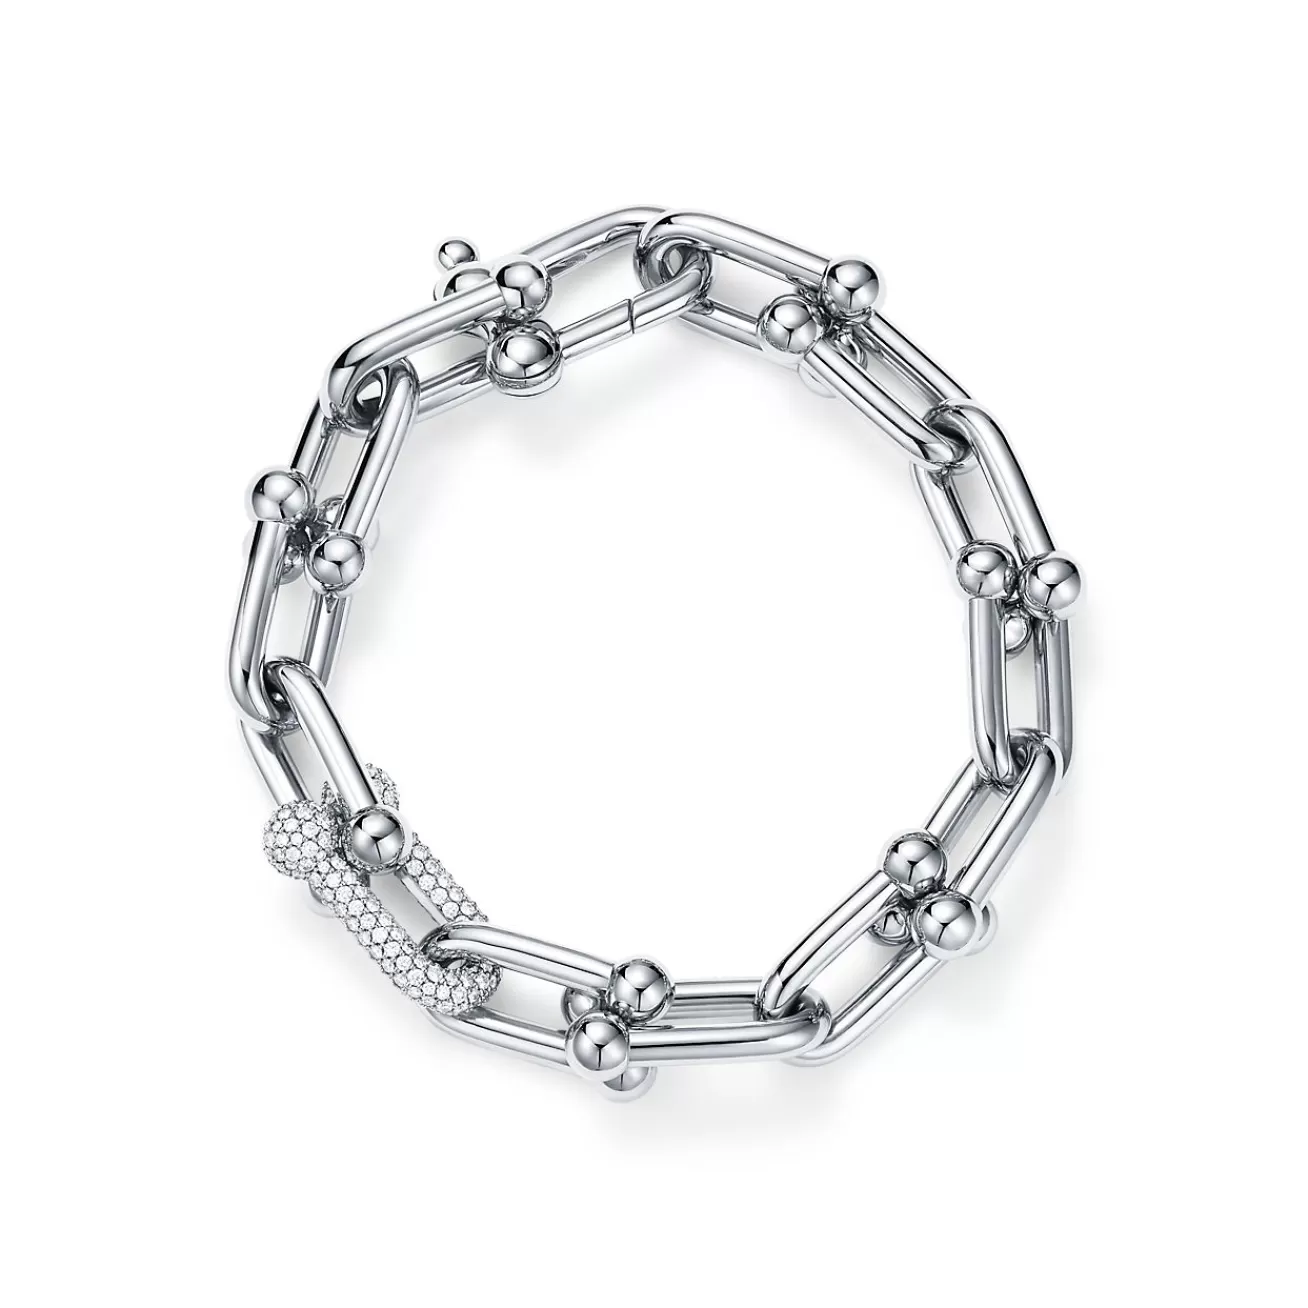 Tiffany & Co. Tiffany HardWear Large Link Bracelet in White Gold with Diamonds | ^ Bracelets | Diamond Jewelry